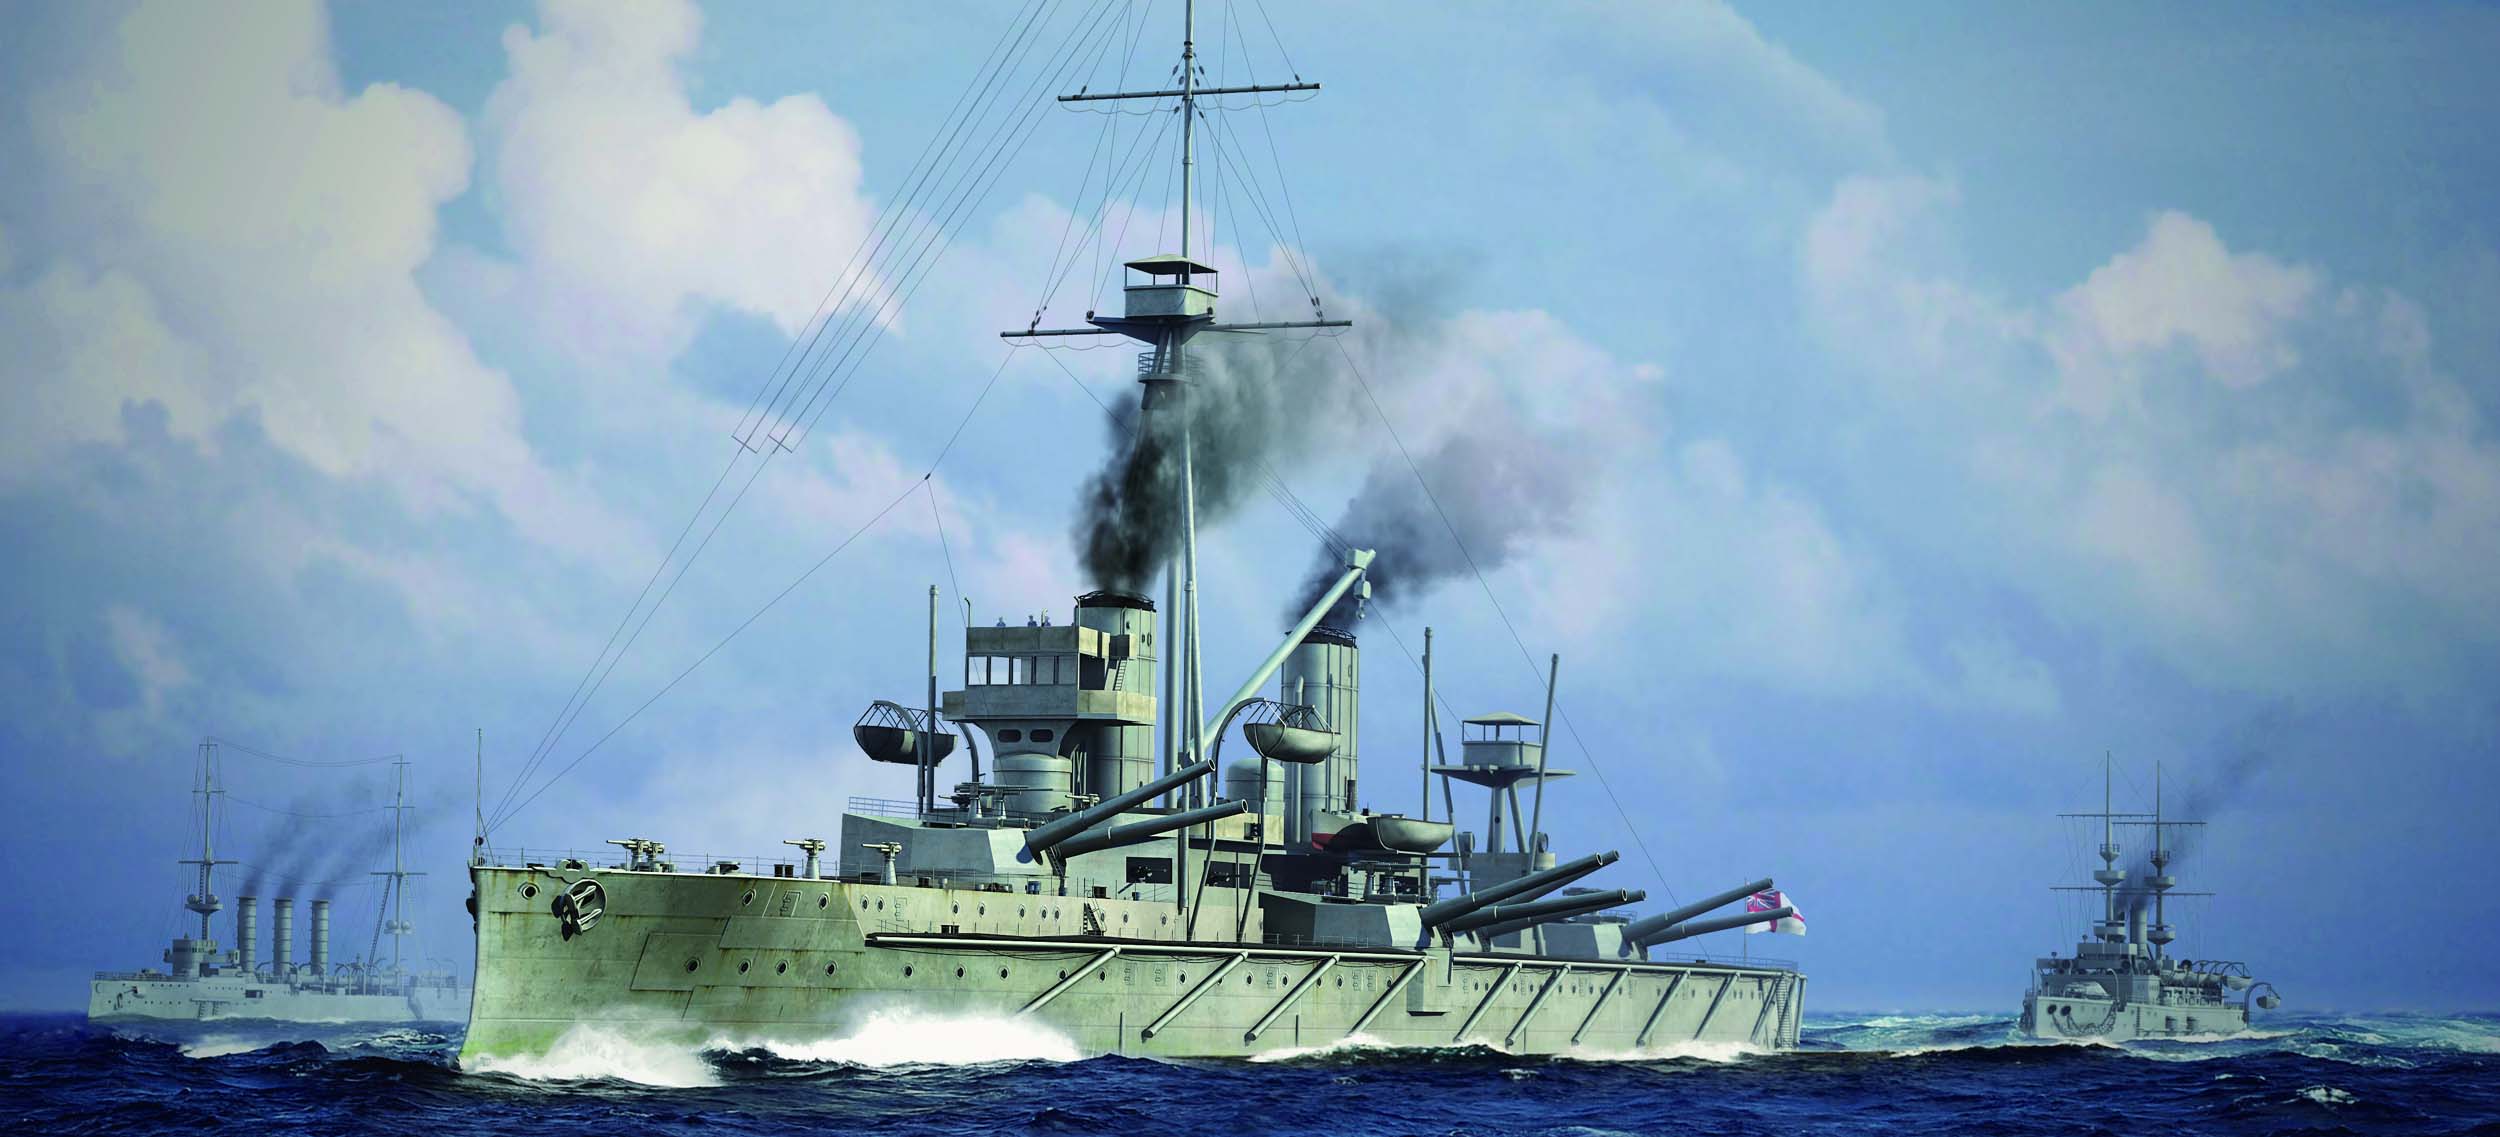 General 2500x1137 warship sea sky military military vehicle artwork clouds smoke water waves Royal Navy navy